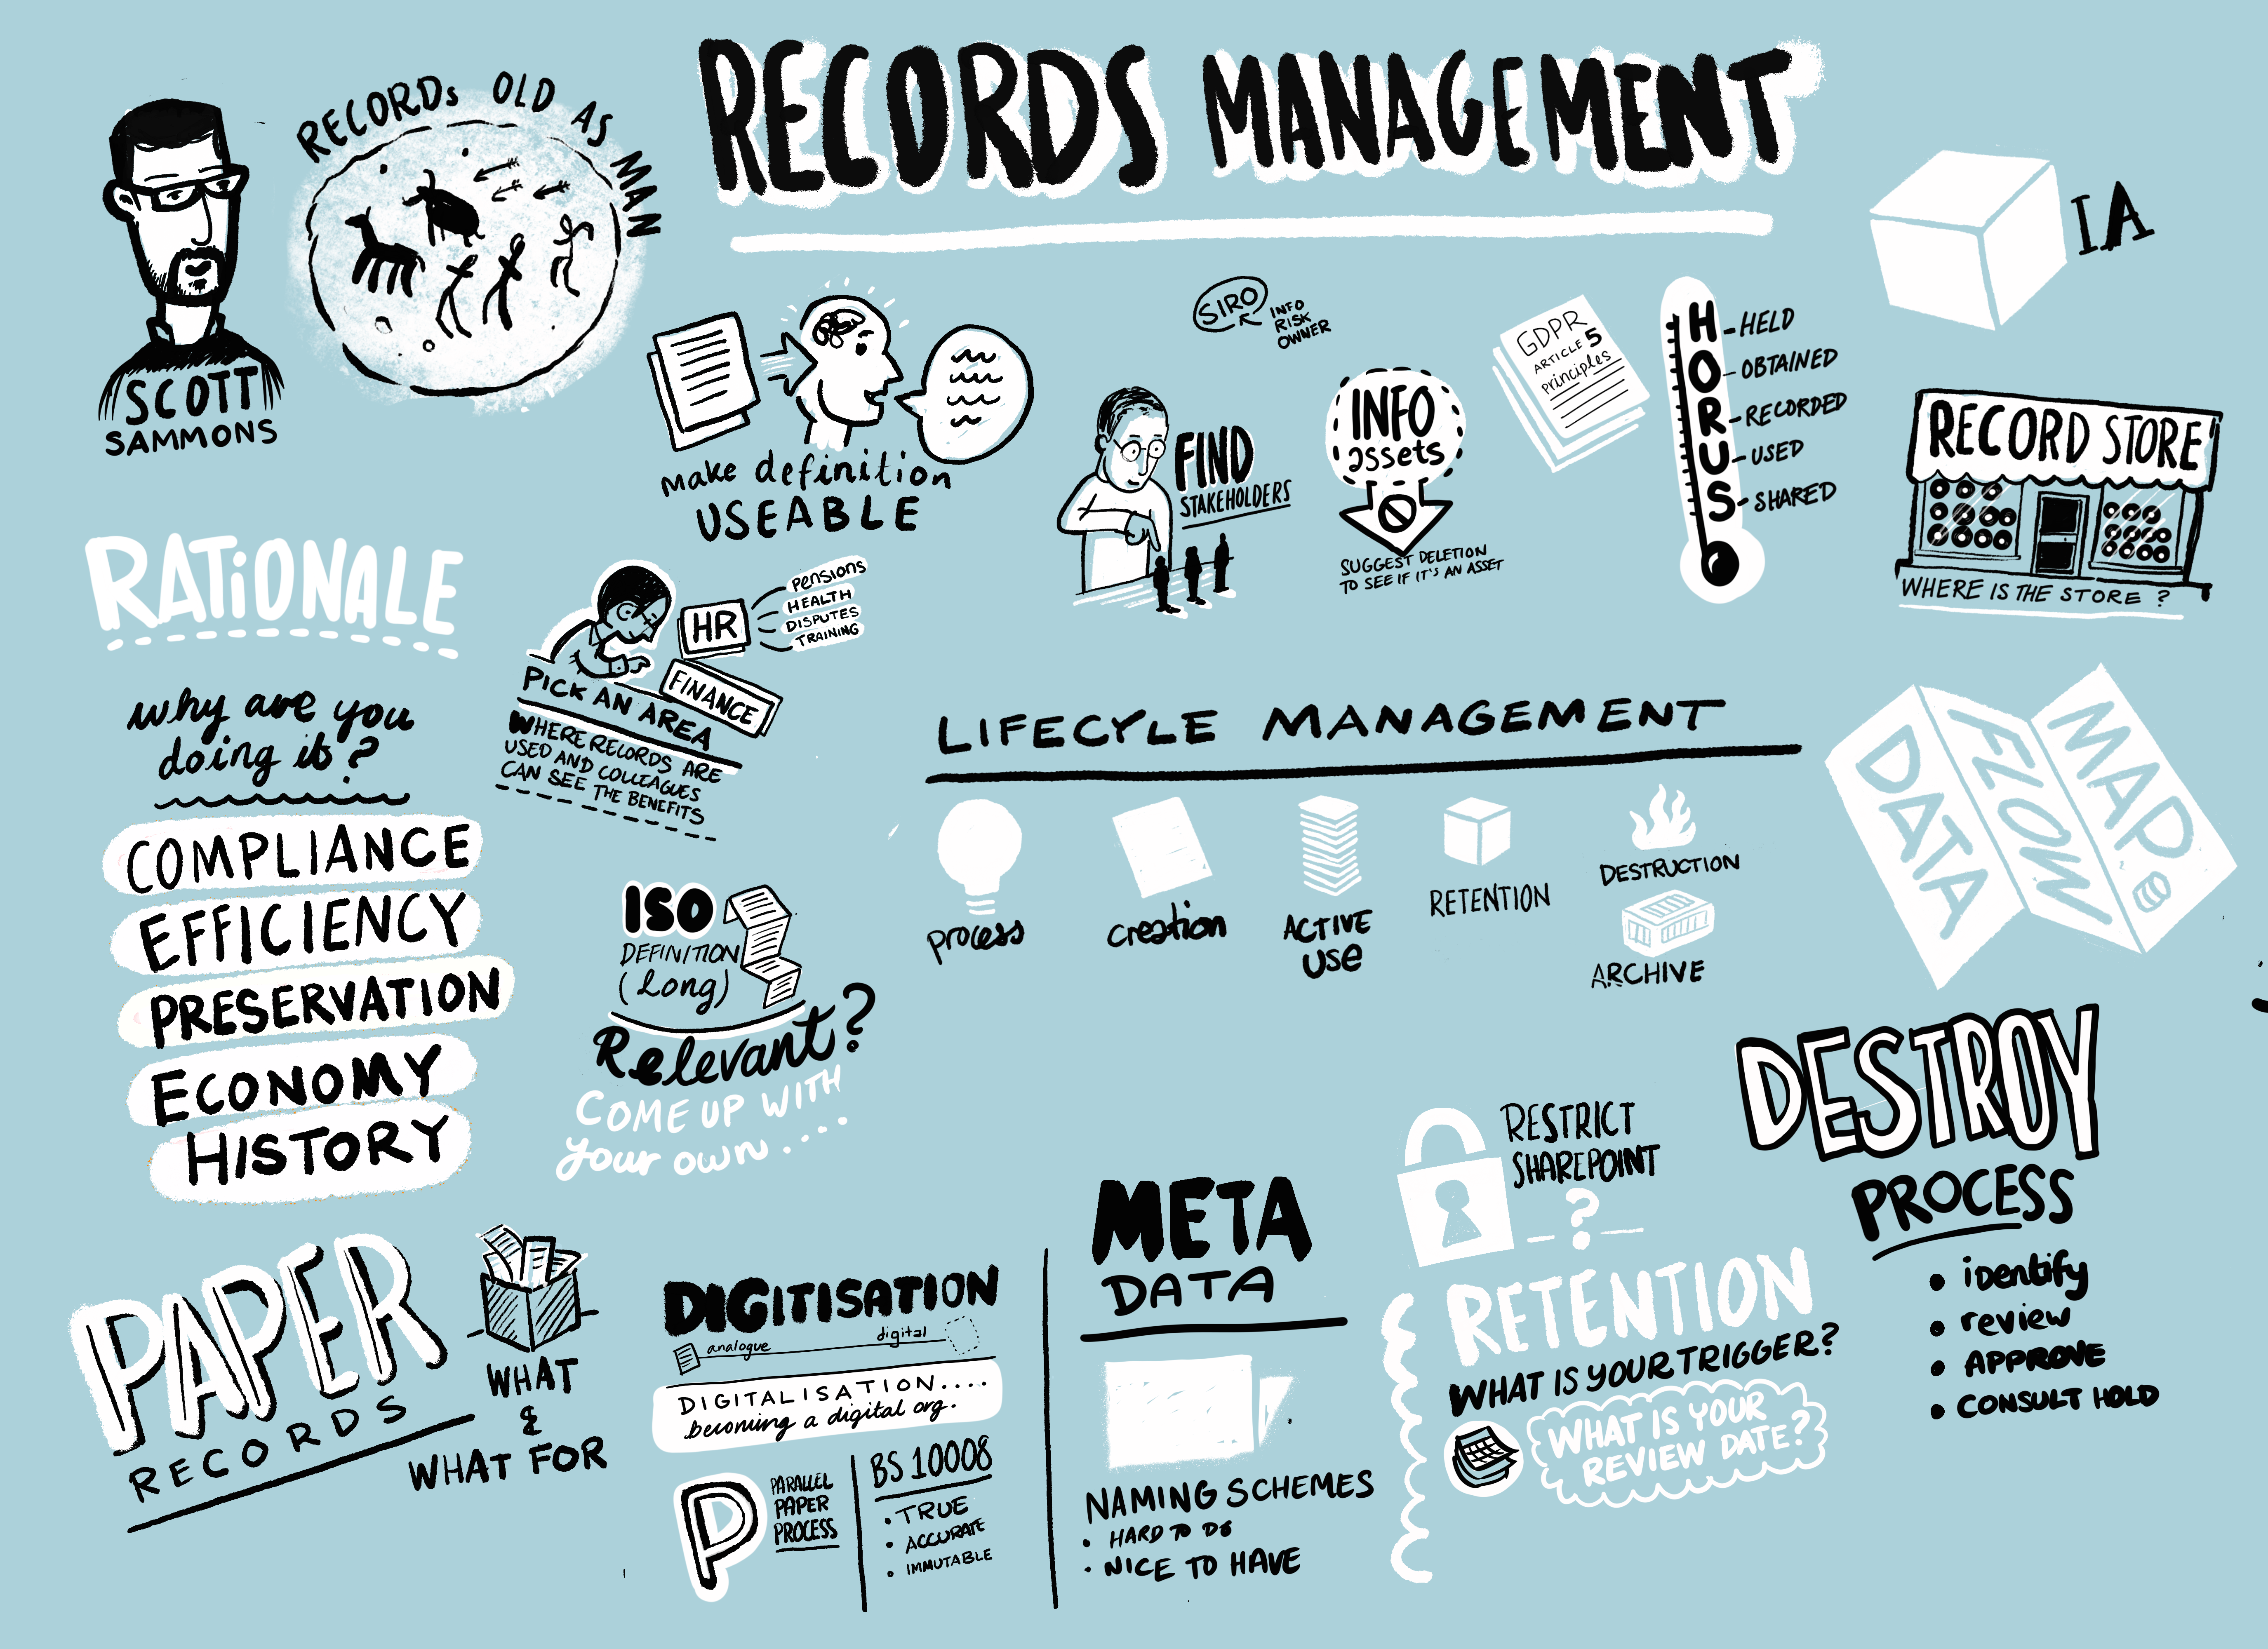 Records Management sketchnotes